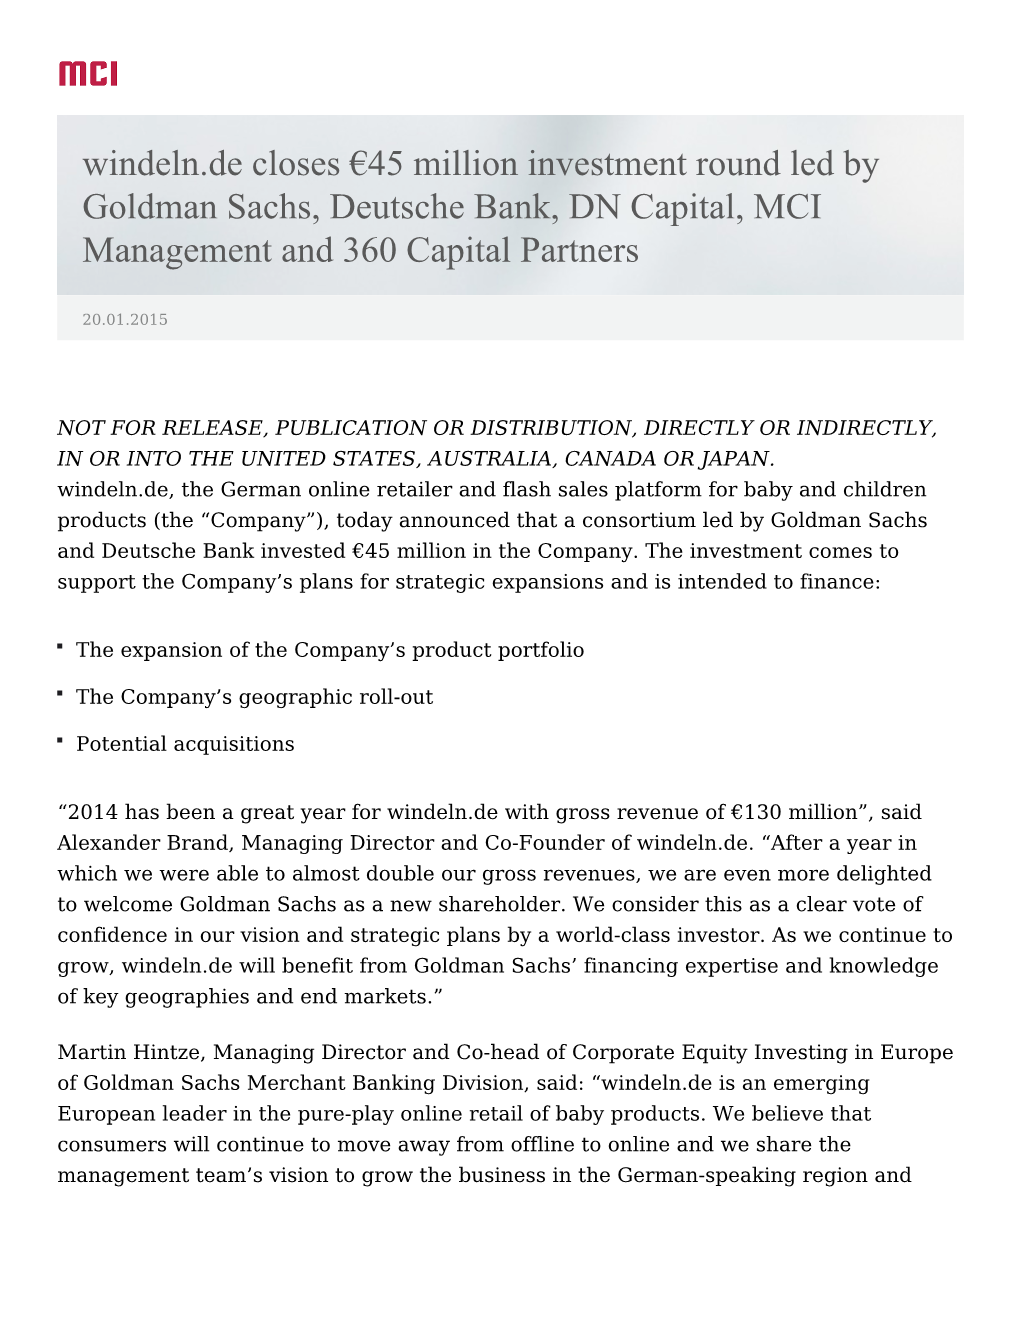 Windeln.De Closes €45 Million Investment Round Led by Goldman Sachs, Deutsche Bank, DN Capital, MCI Management and 360 Capital Partners